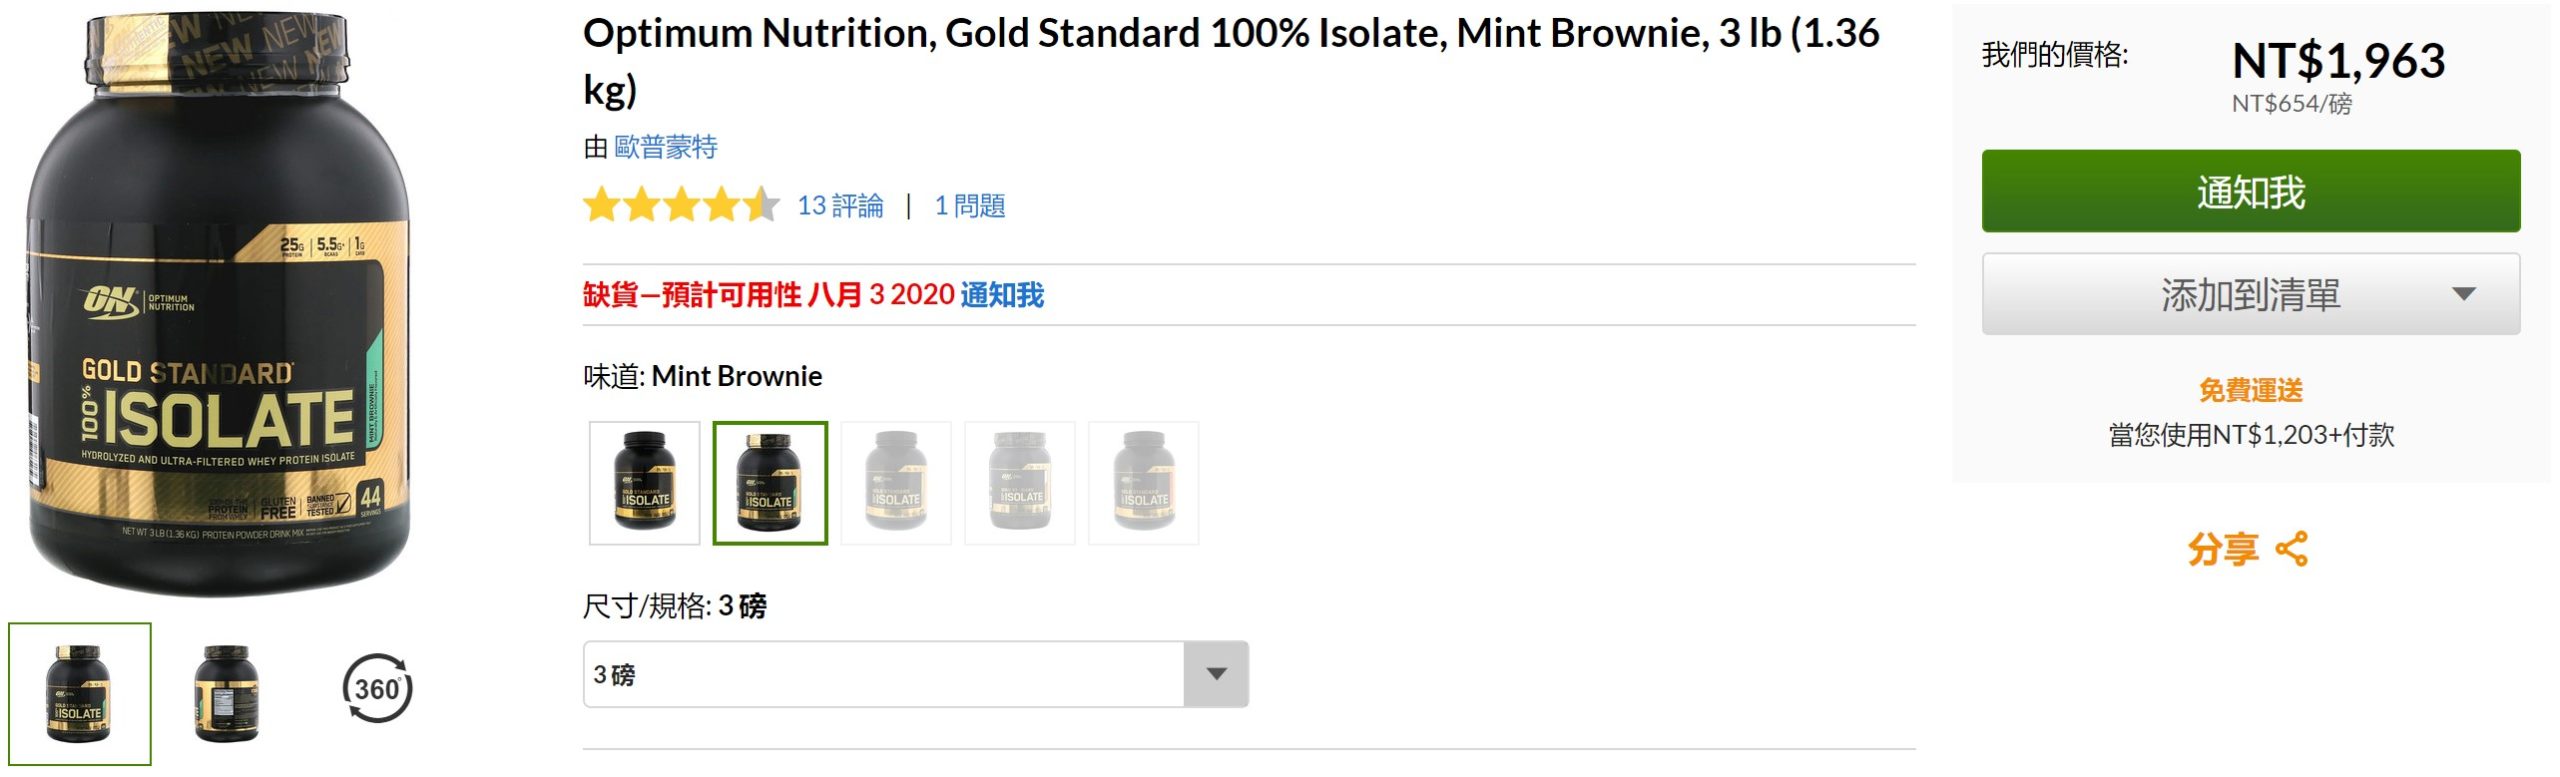 Optimum-Nutrition-Gold-Standard-100-Isolate-Mint-Brownie-3-lb-1.36-kg